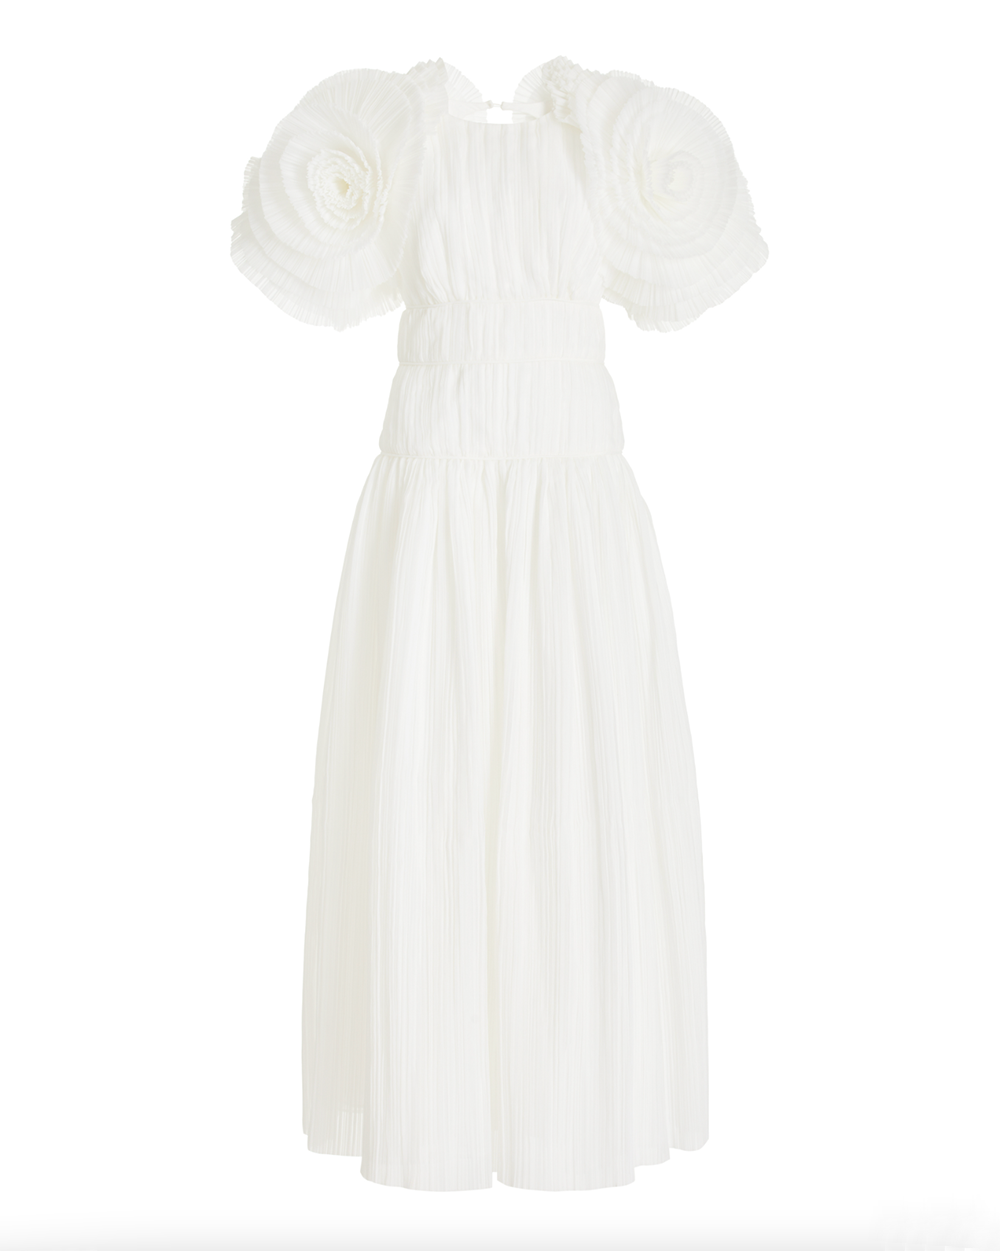 1683835658 best engagement party dresses aje white dress